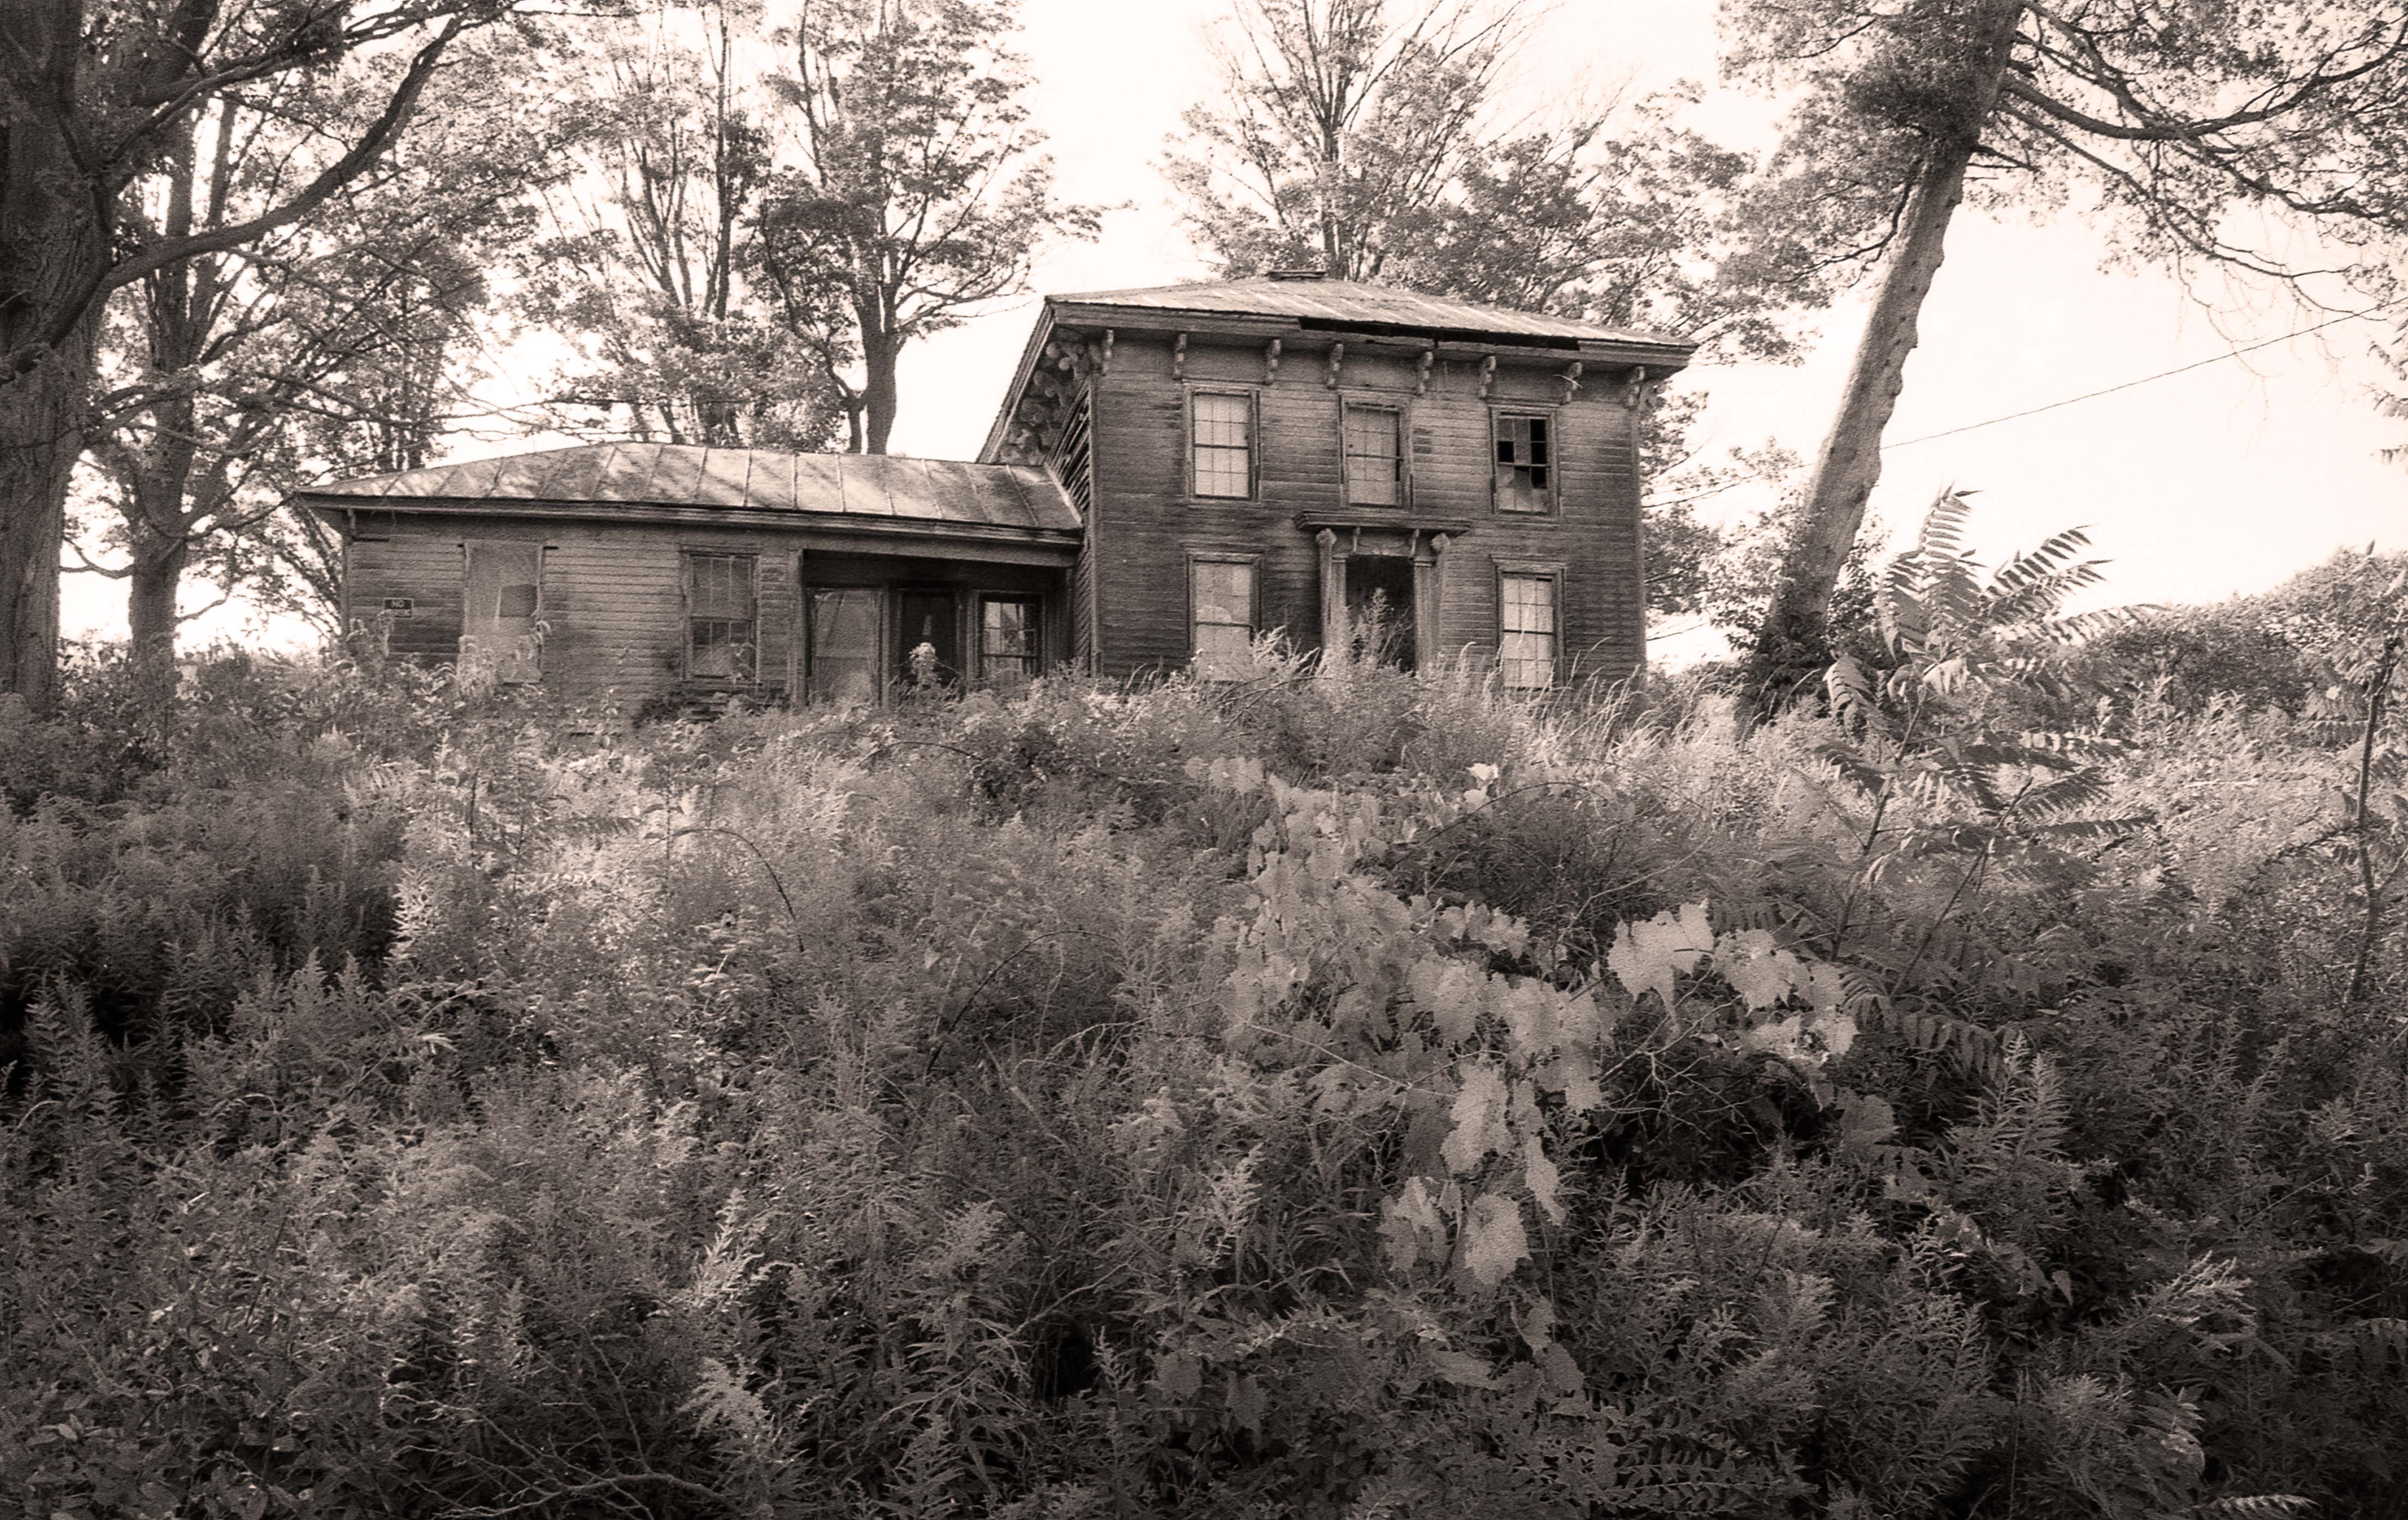 Abandoned Home - Chautauqua County, New York - 2010